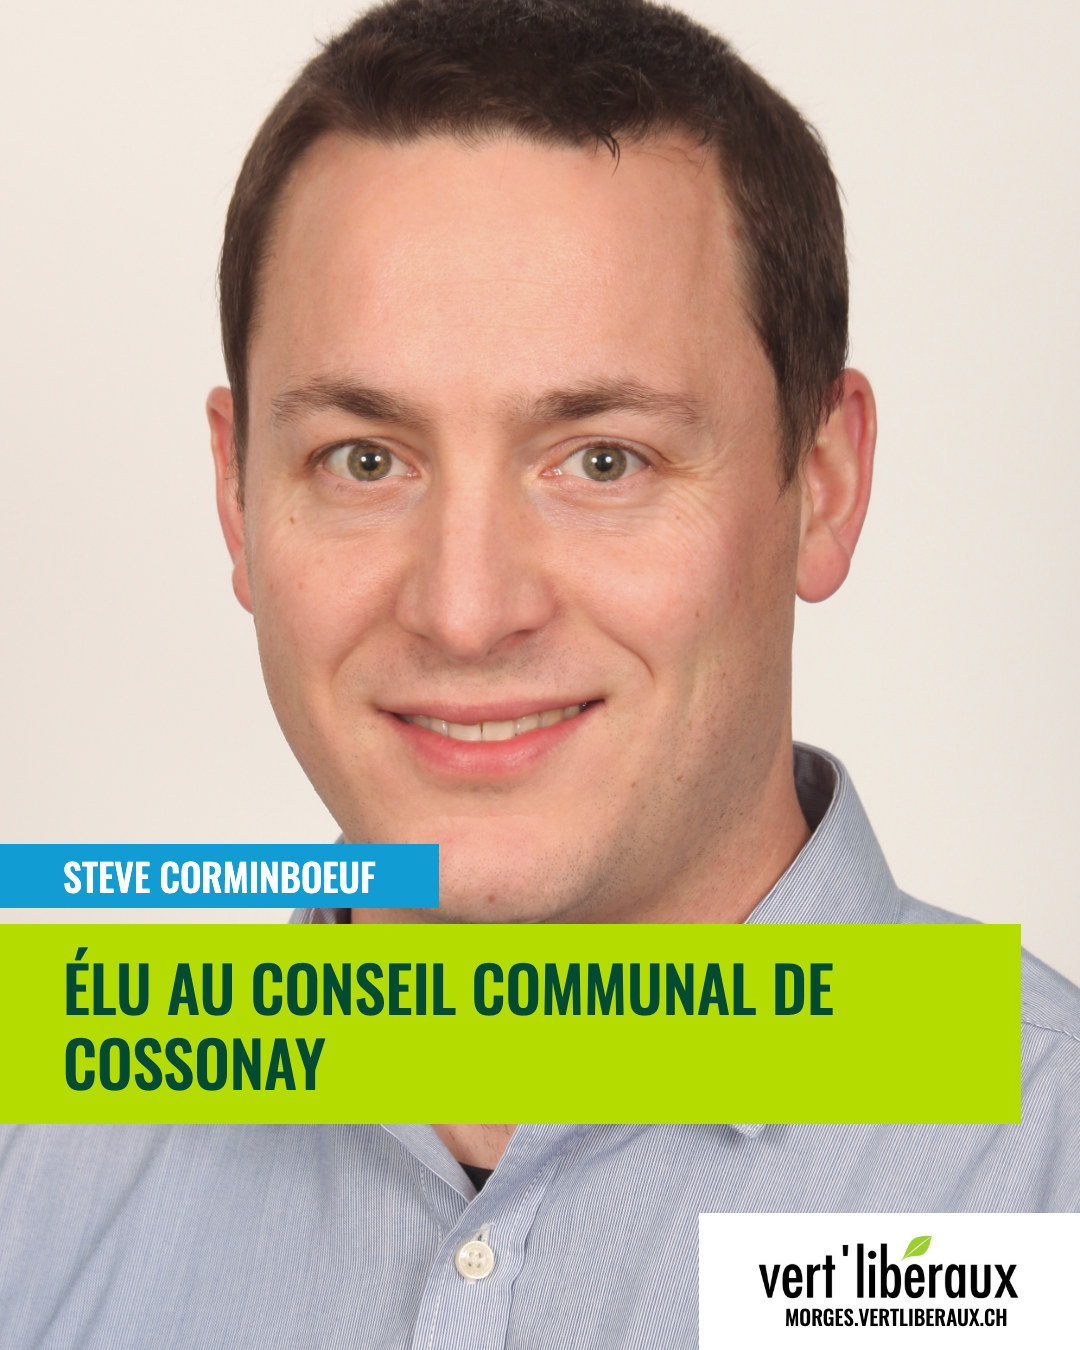 Steve Corminboeuf